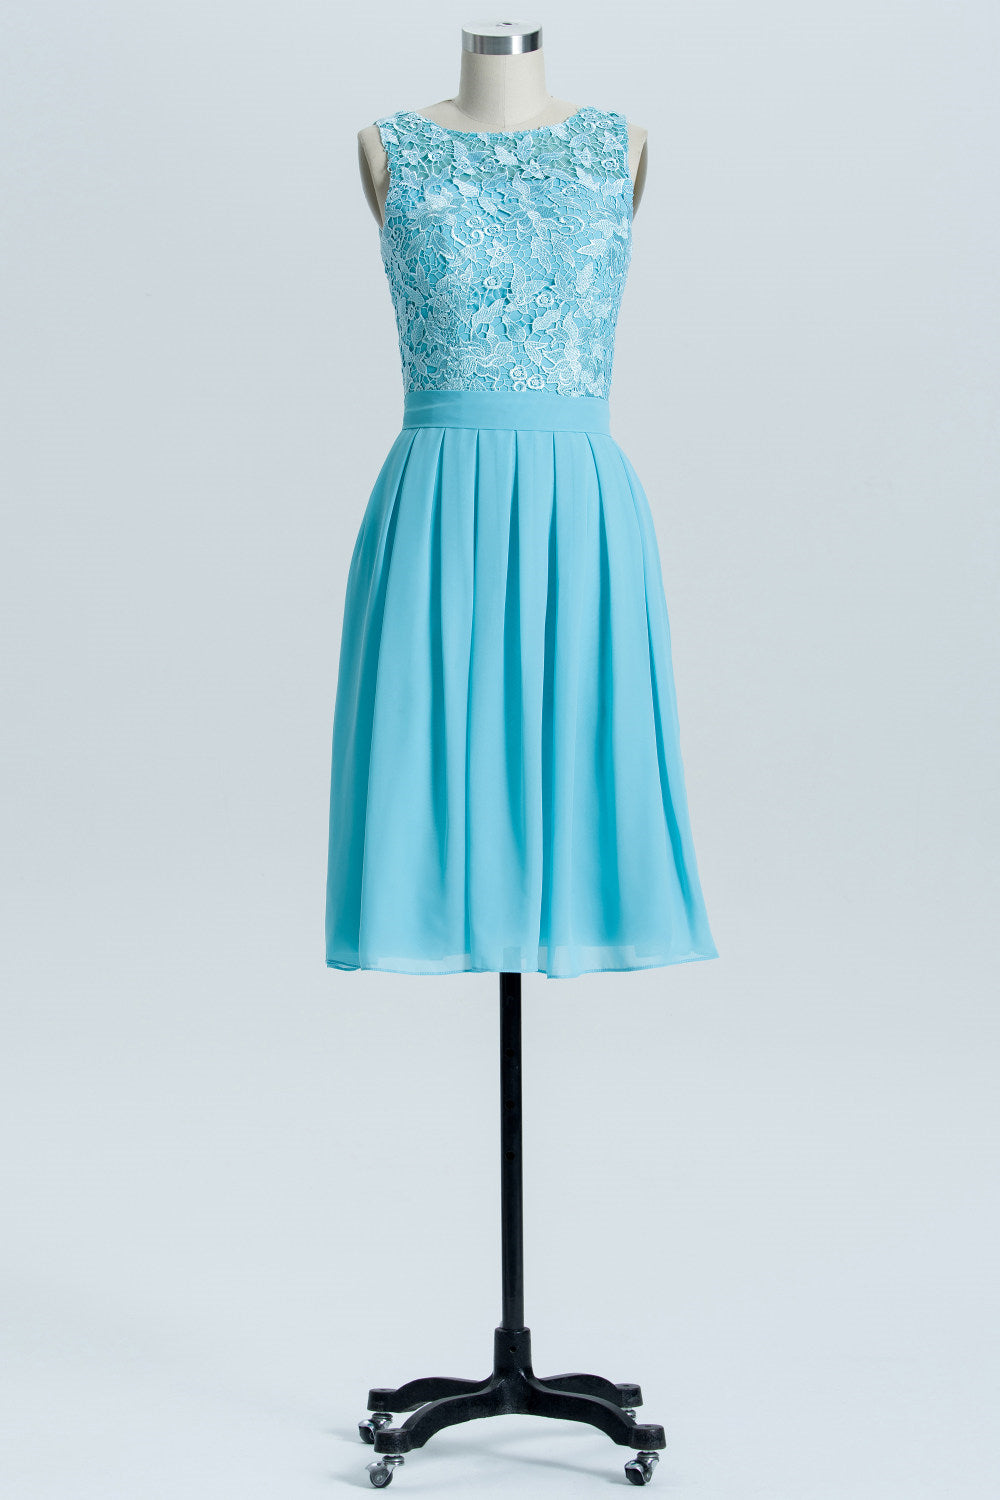 Princess Blue Lace and Chiffon Short A-line Homecoming Dress